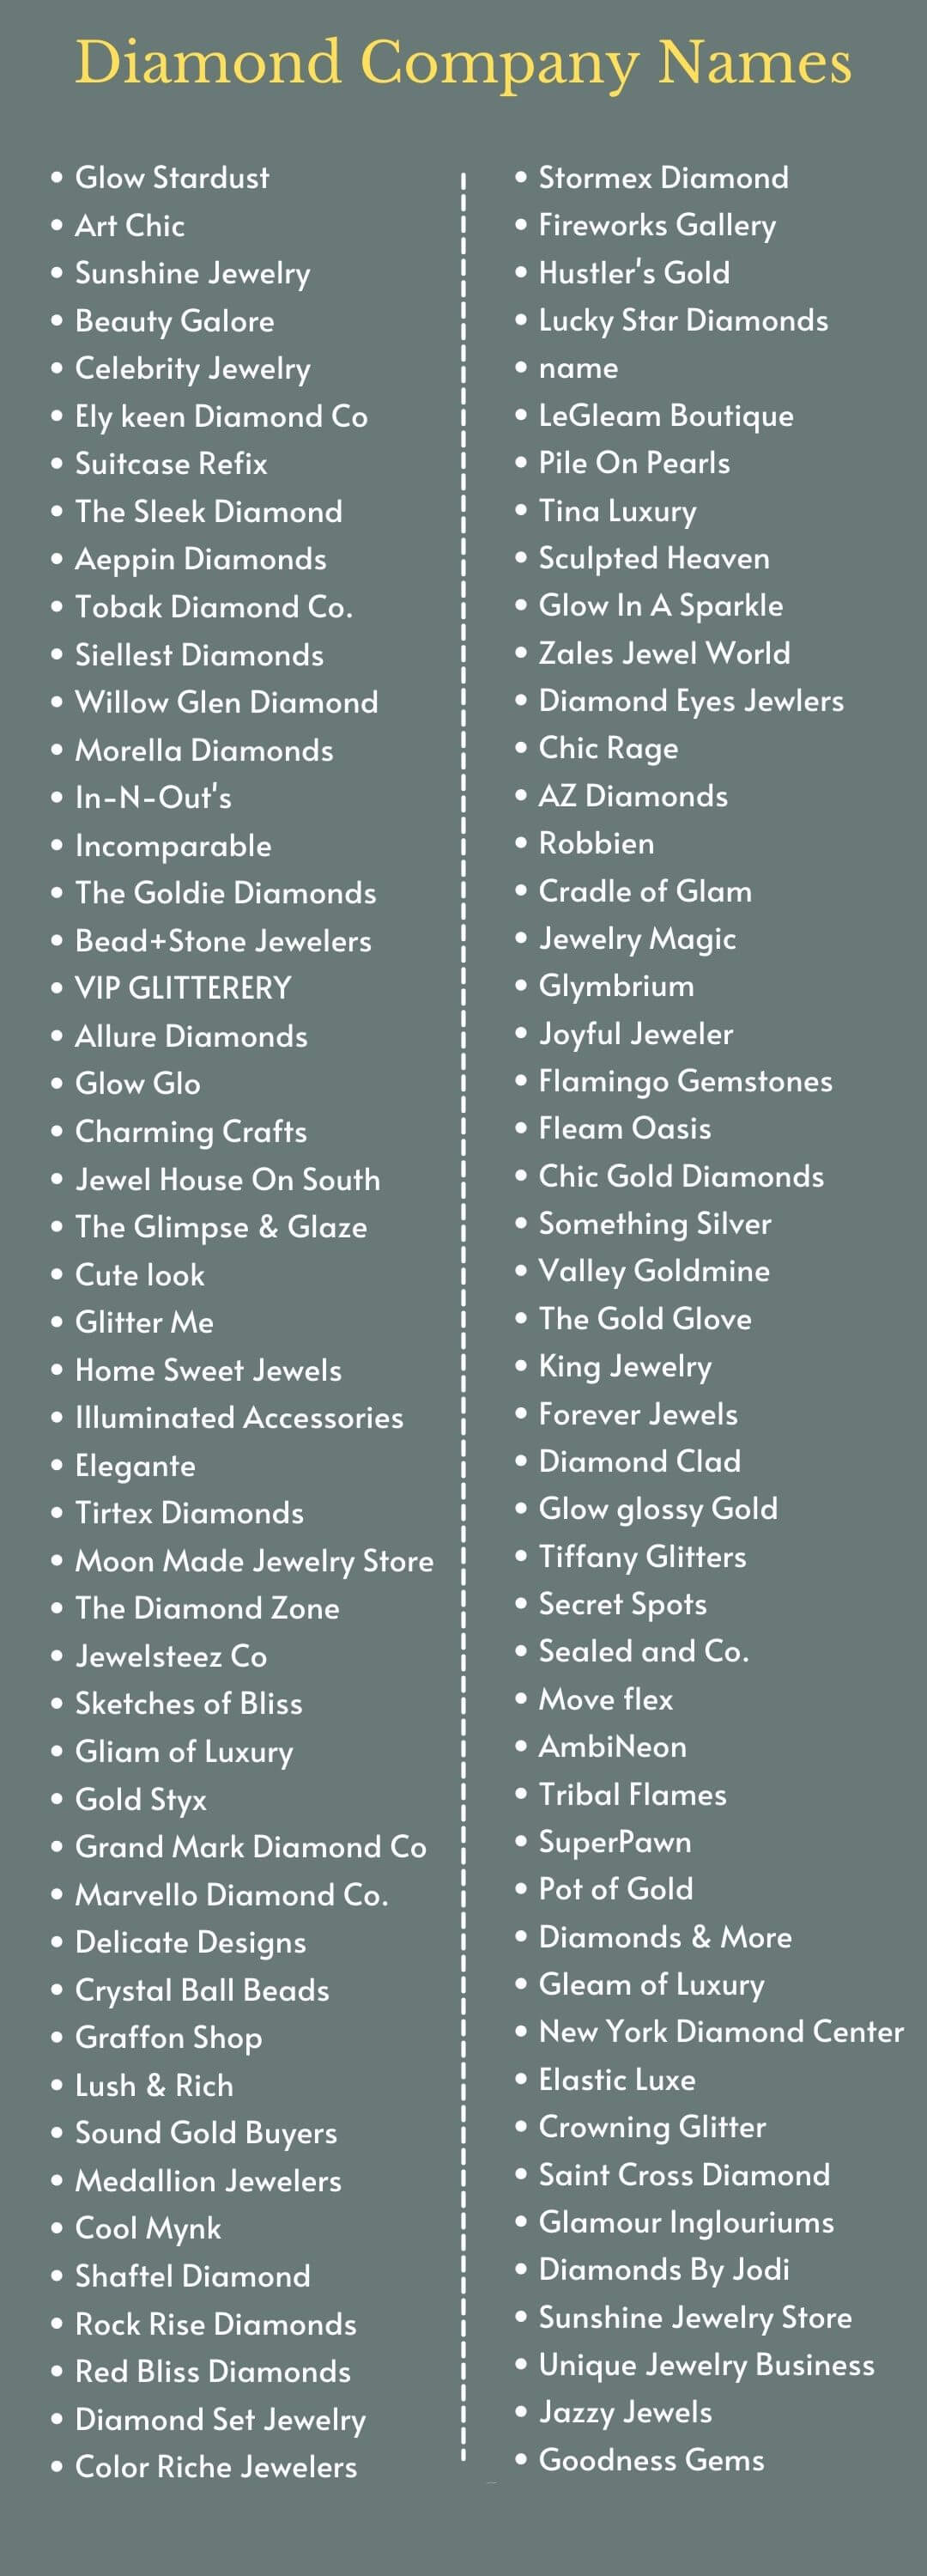 Diamond Company Names: Infographic